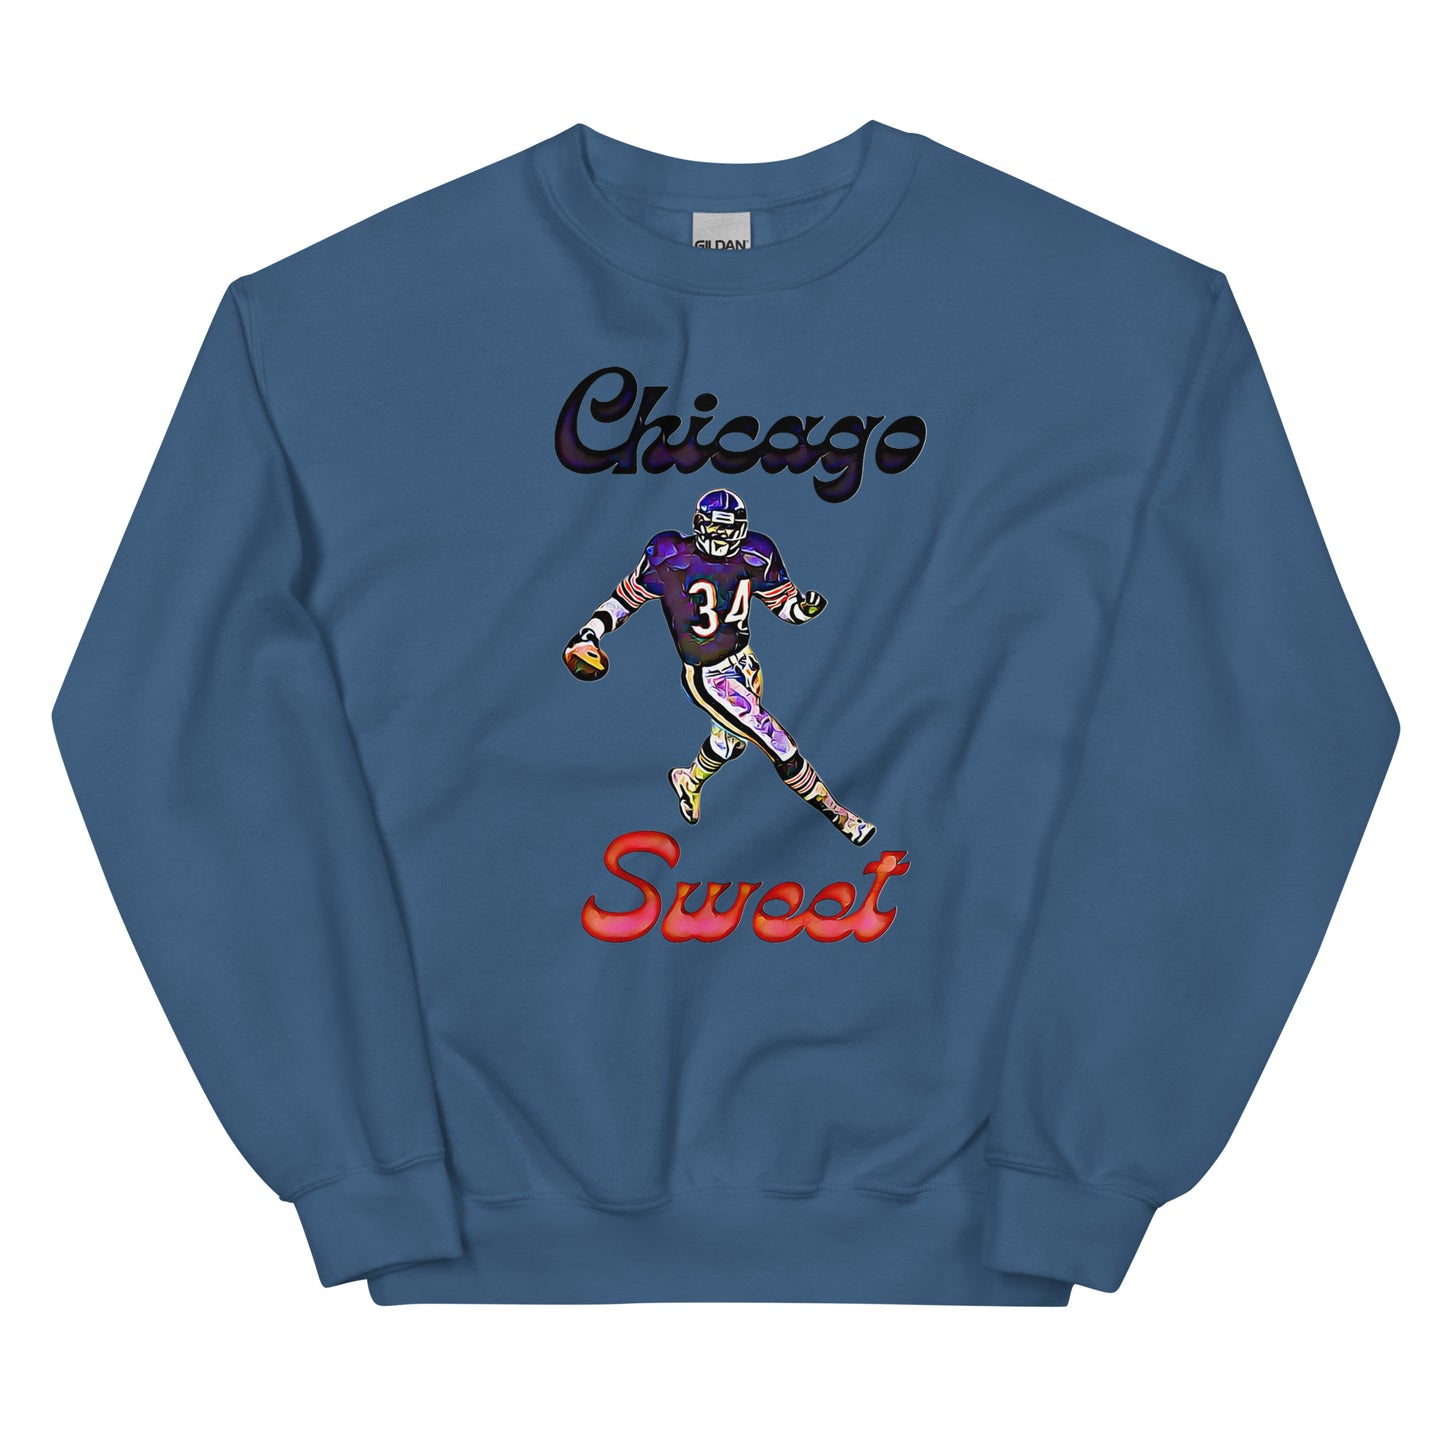 Walter Payton Chicago Sweet Sweatshirt